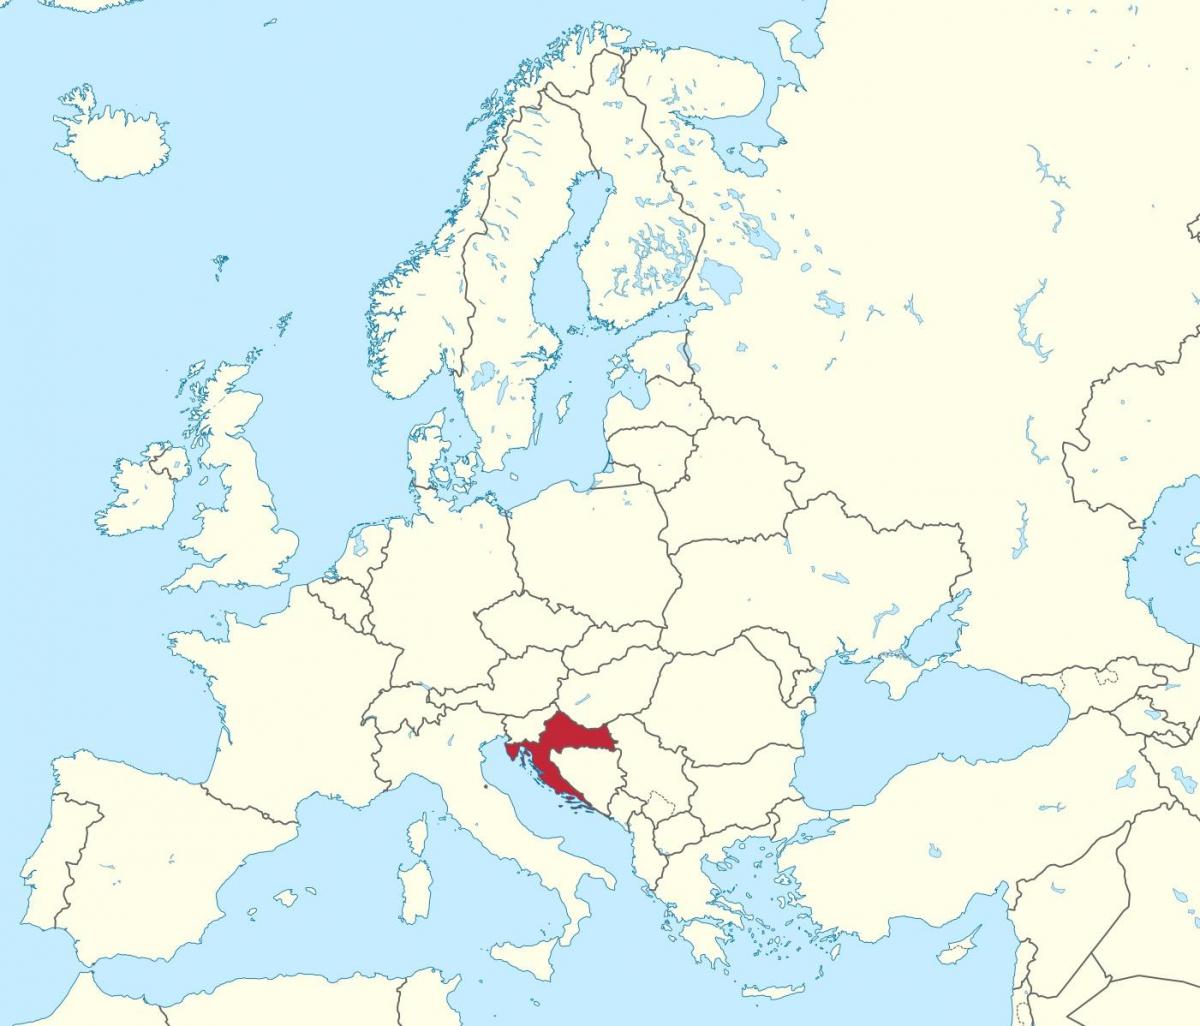 hrvatska na kartu europe